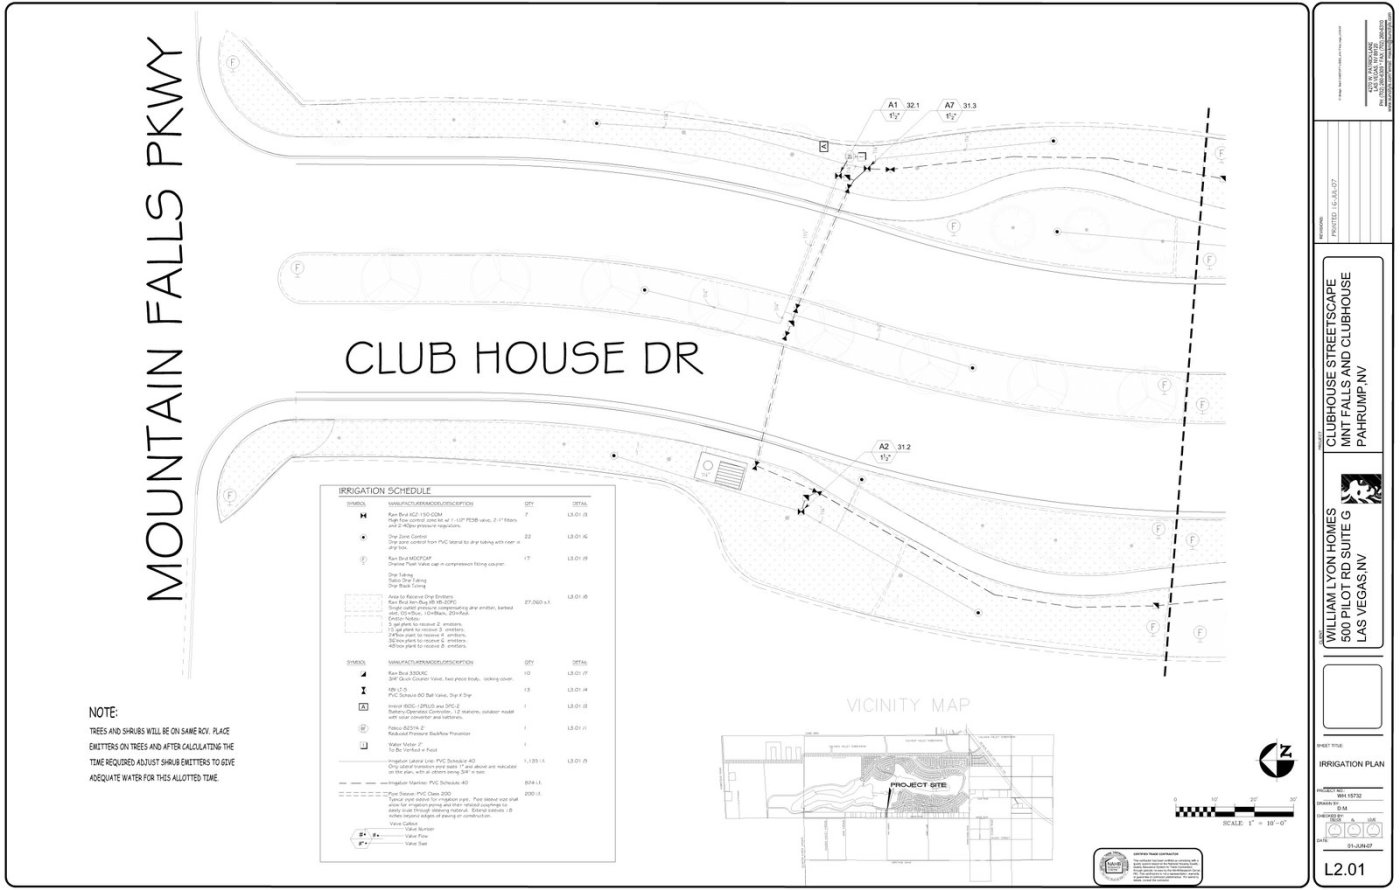 Club_House_Drive_IRR_06-18-07-L2.01